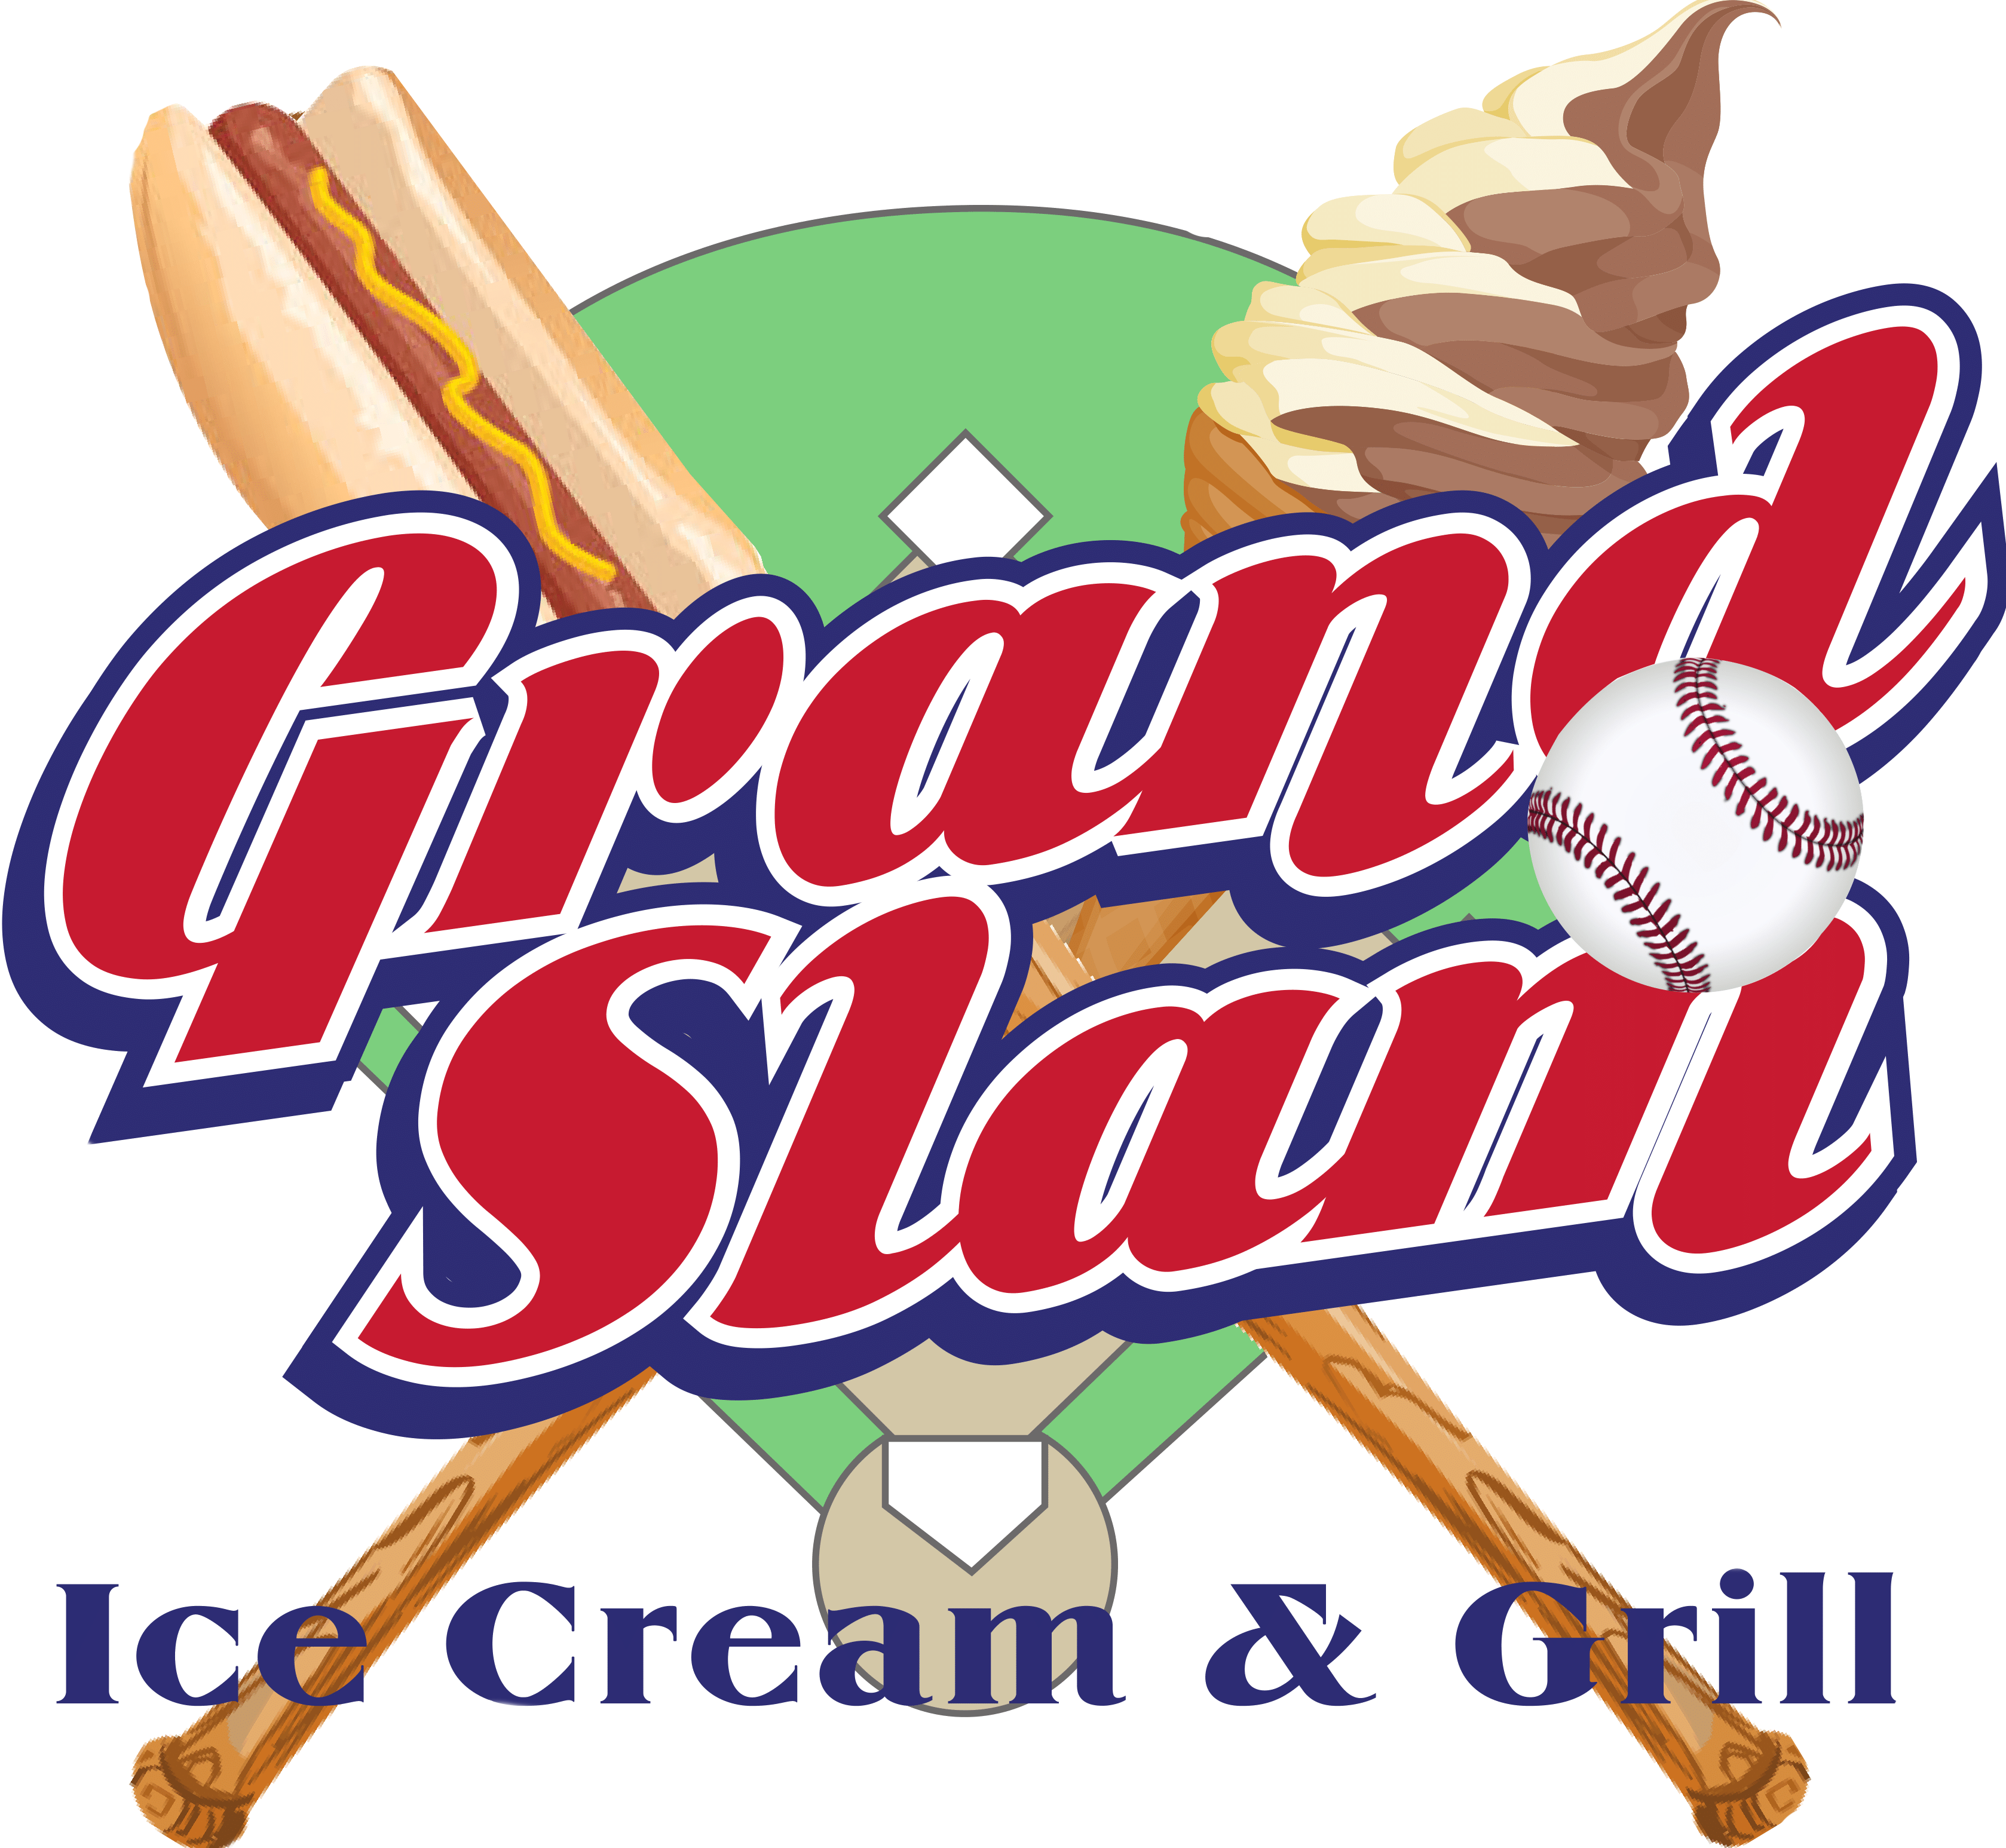 grand slam baseball clipart png